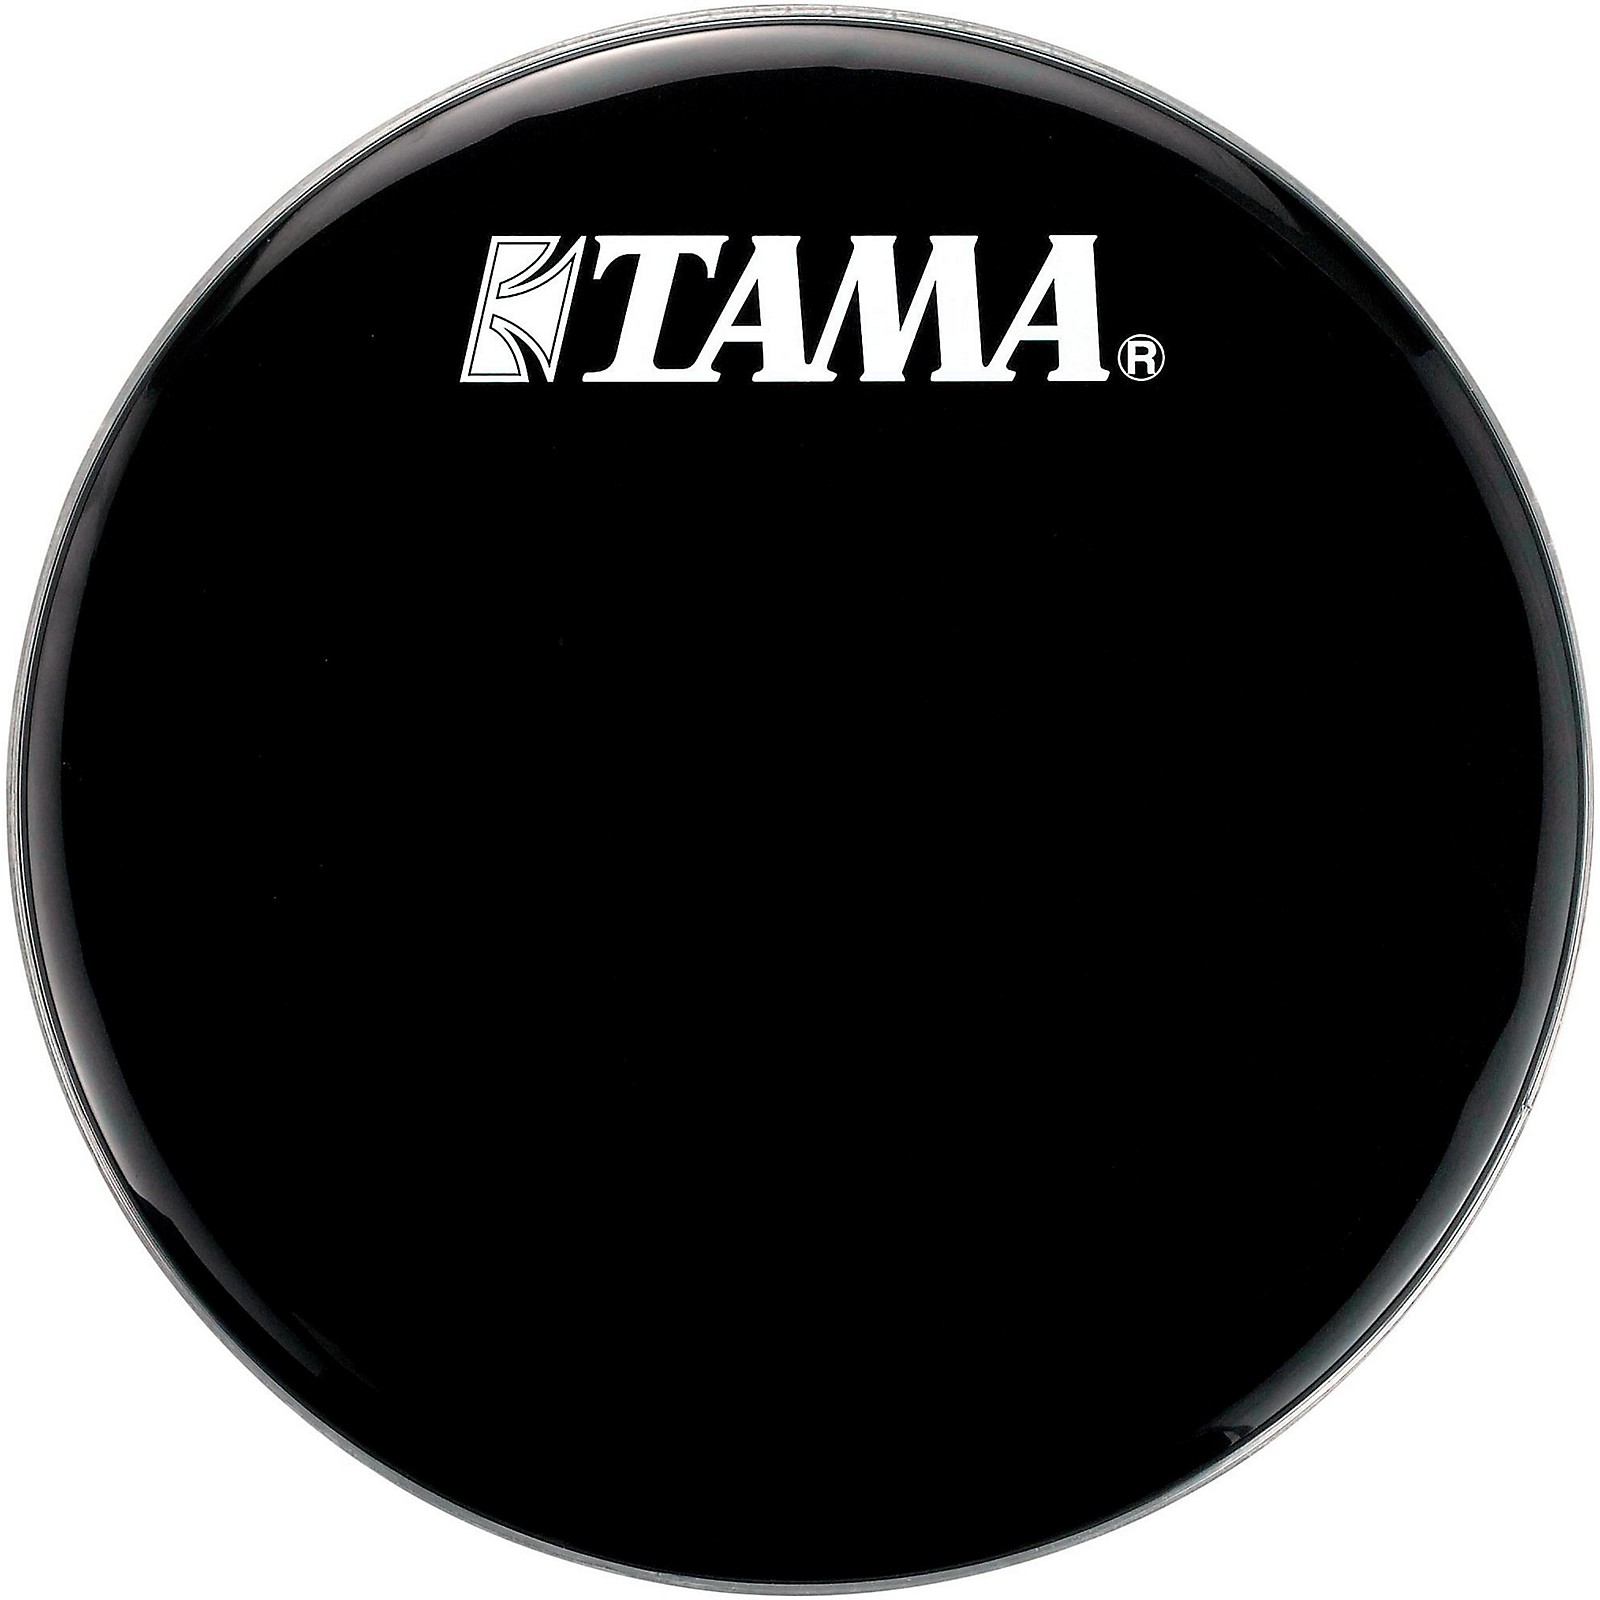 Tama Logo Resonant Bass Drum Head 22 In Black Musician S Friend